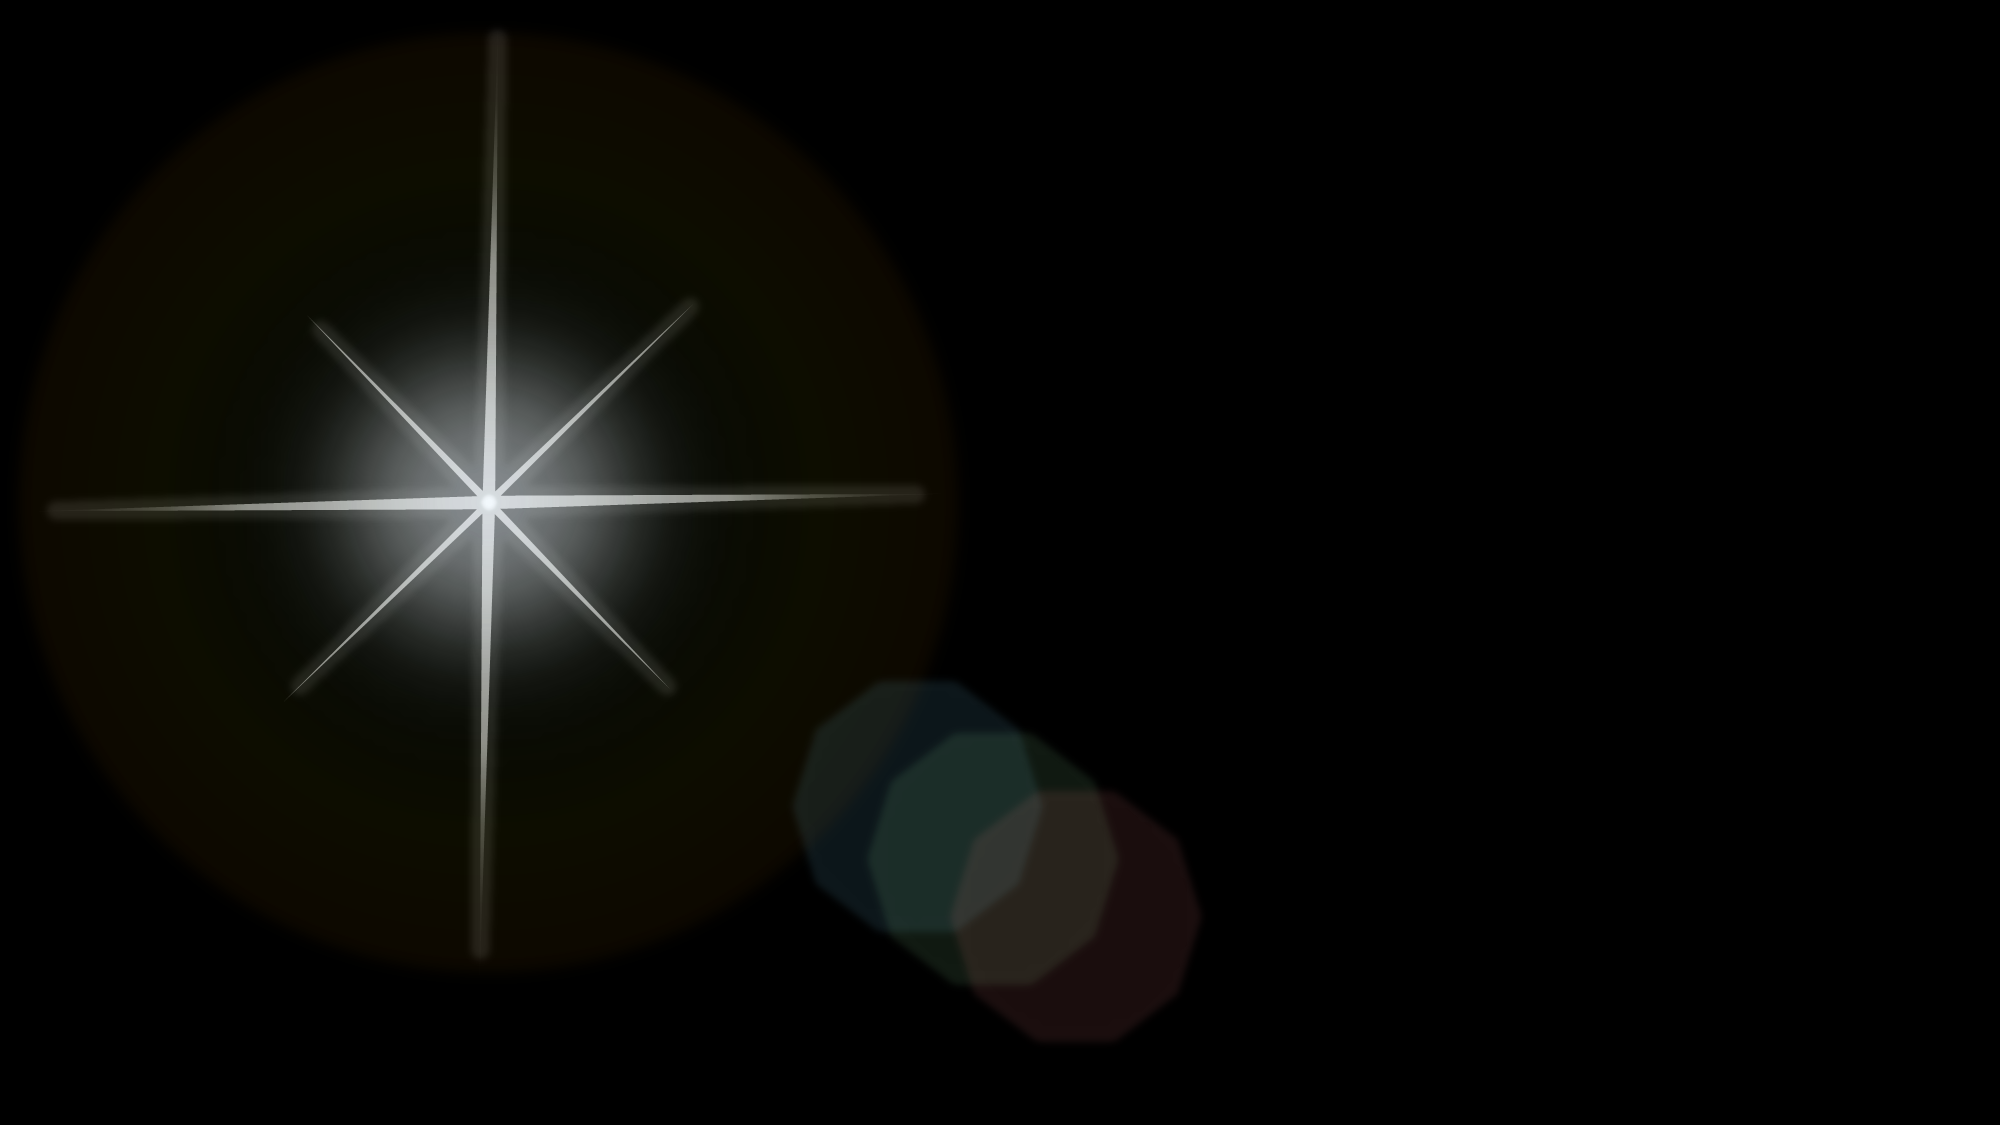 Light Glare Effect On Black Background by MephilesTheDark2182 on ...